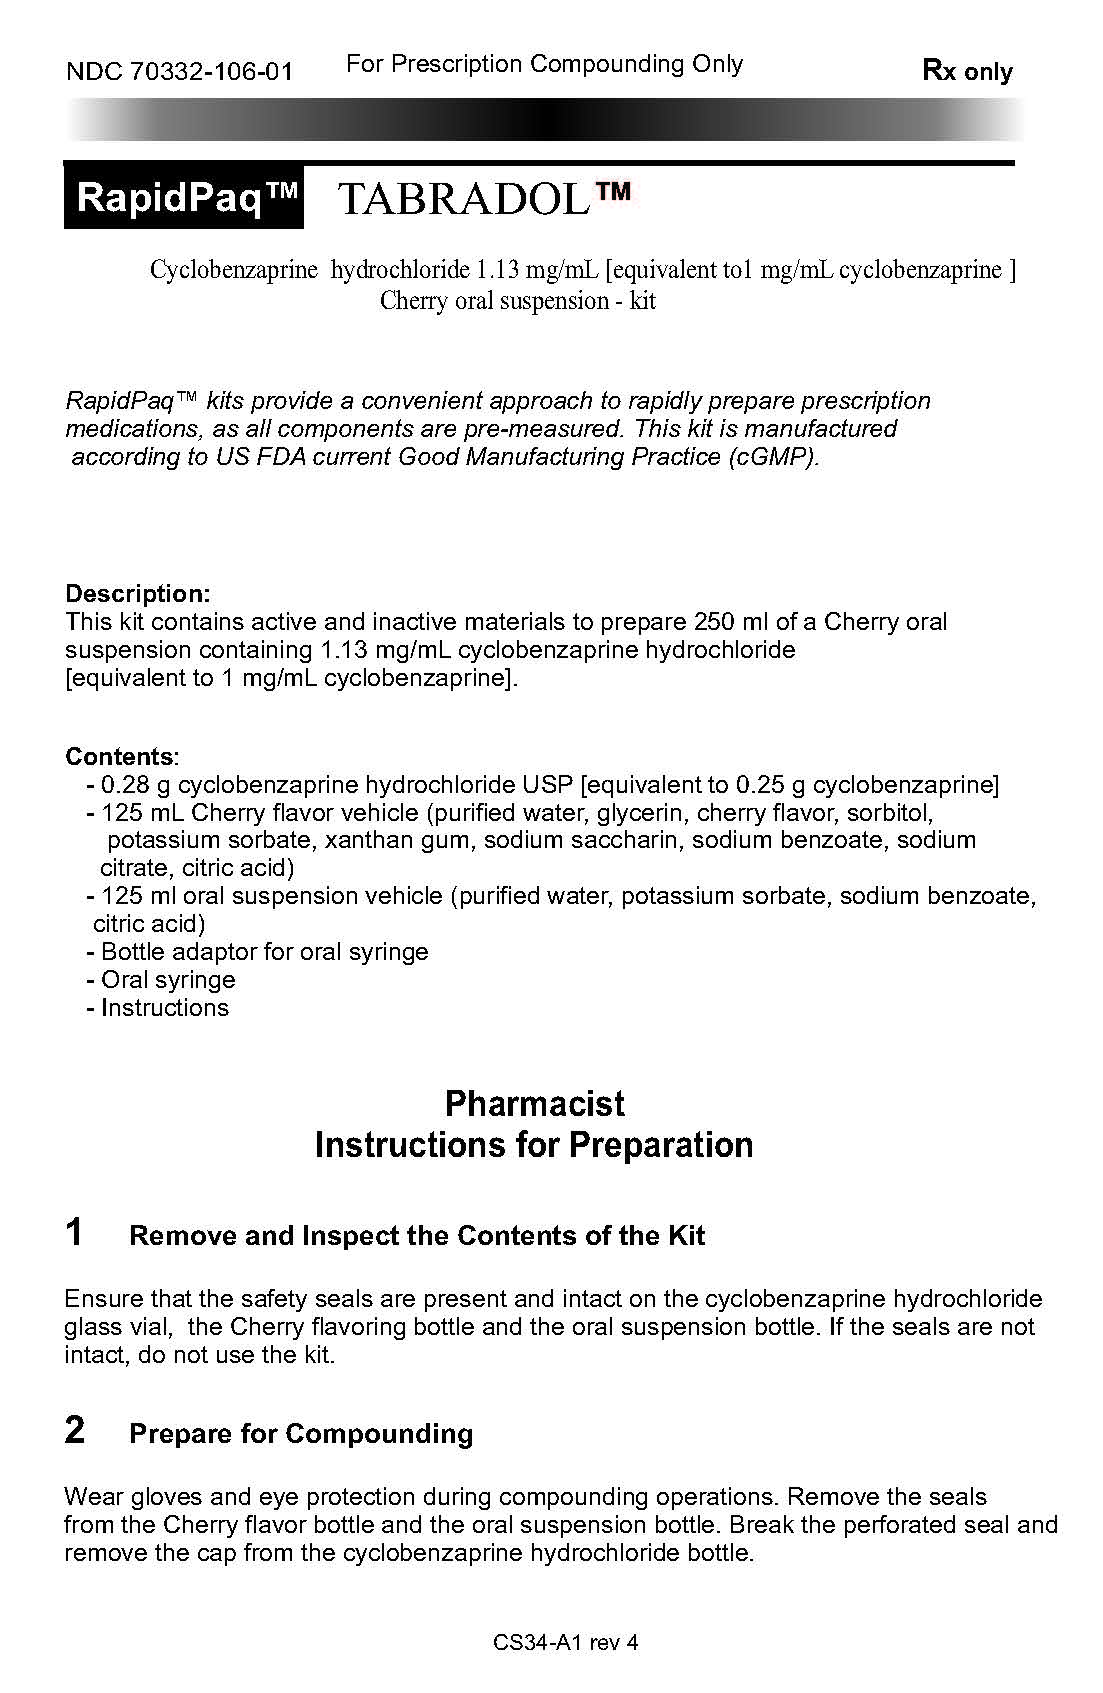 Tabradol - pharmacist instructions page 1